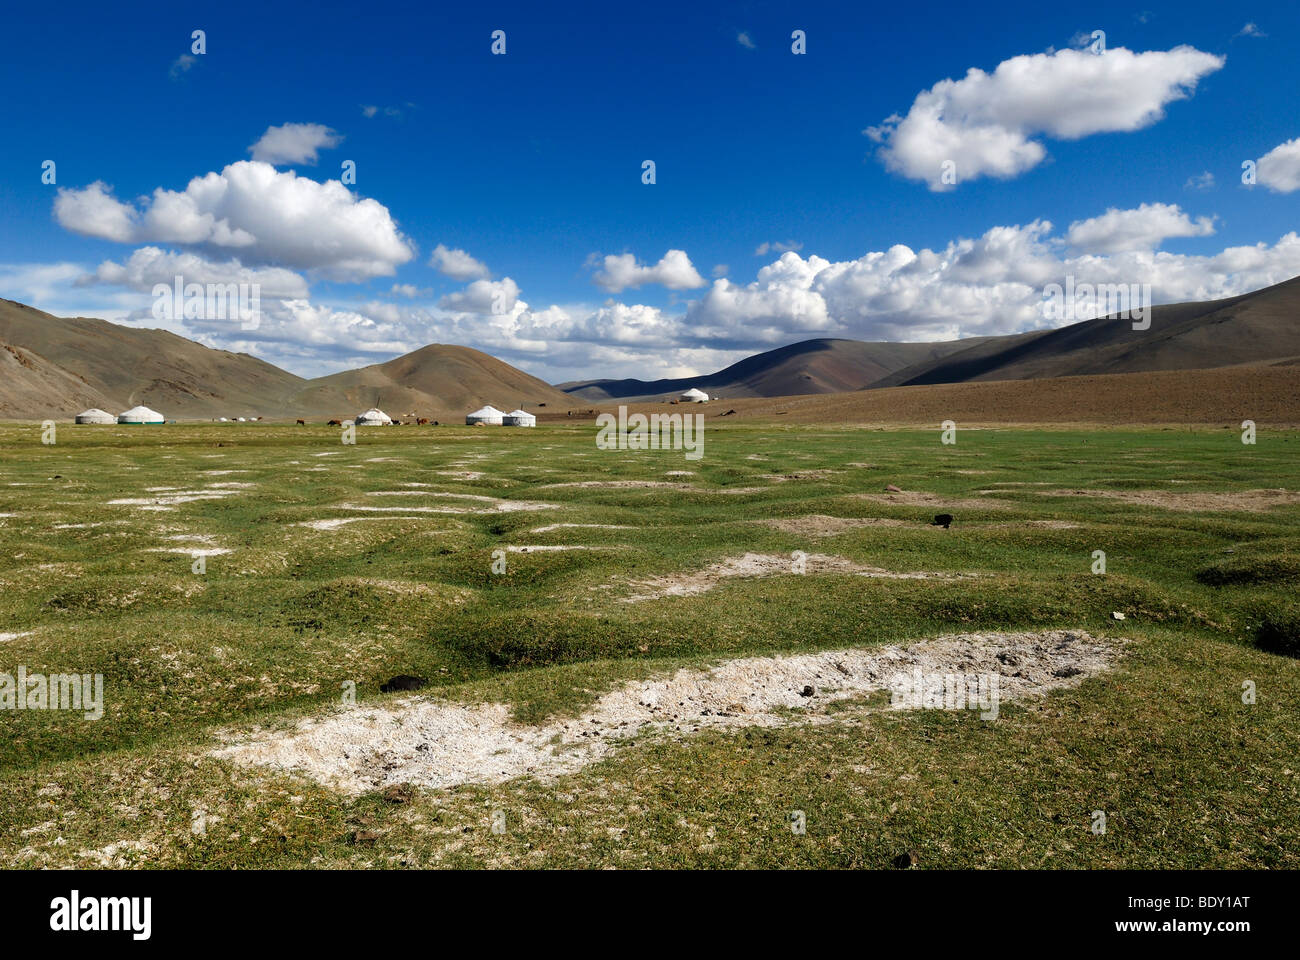 Nomad yurts in the Mongolian steppe, Aimak Bayan Ulgi, Altai Mountains, Mongolia, Asia Stock Photo